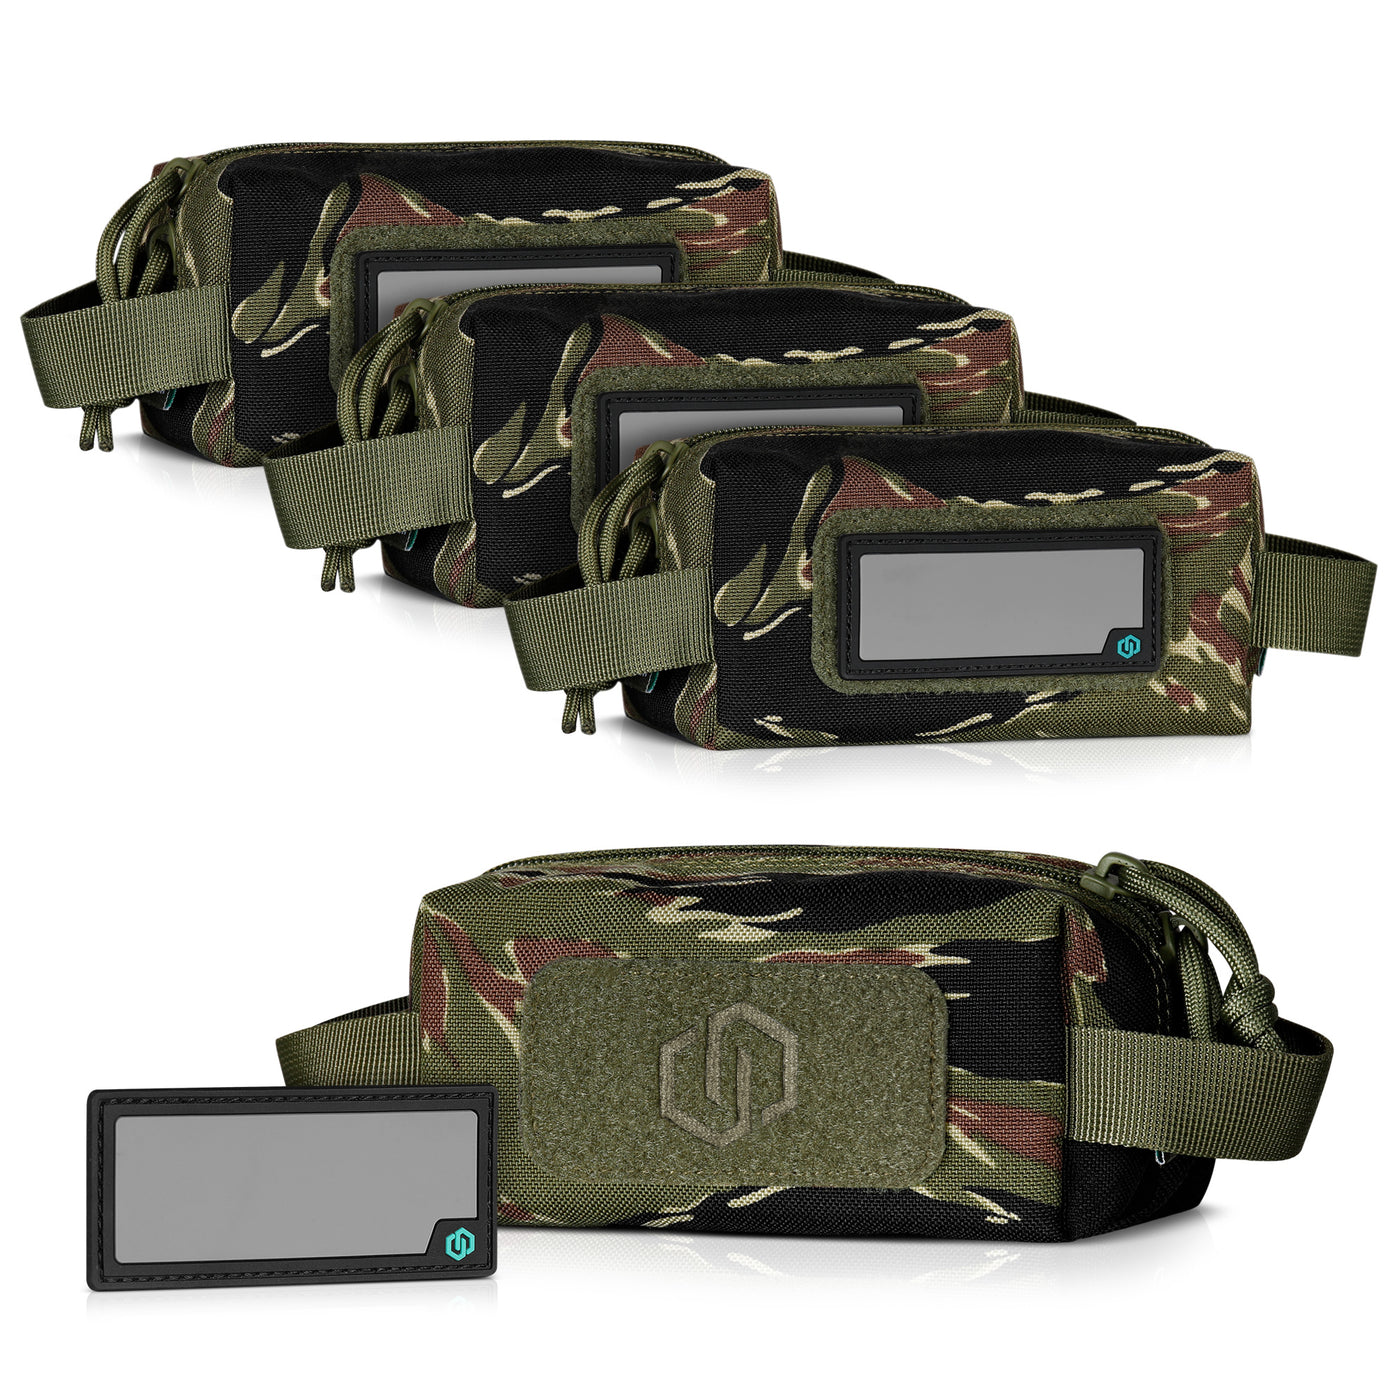 Loose Sac - Ammo Bag Small - Tiger Stripe - 4-Pack